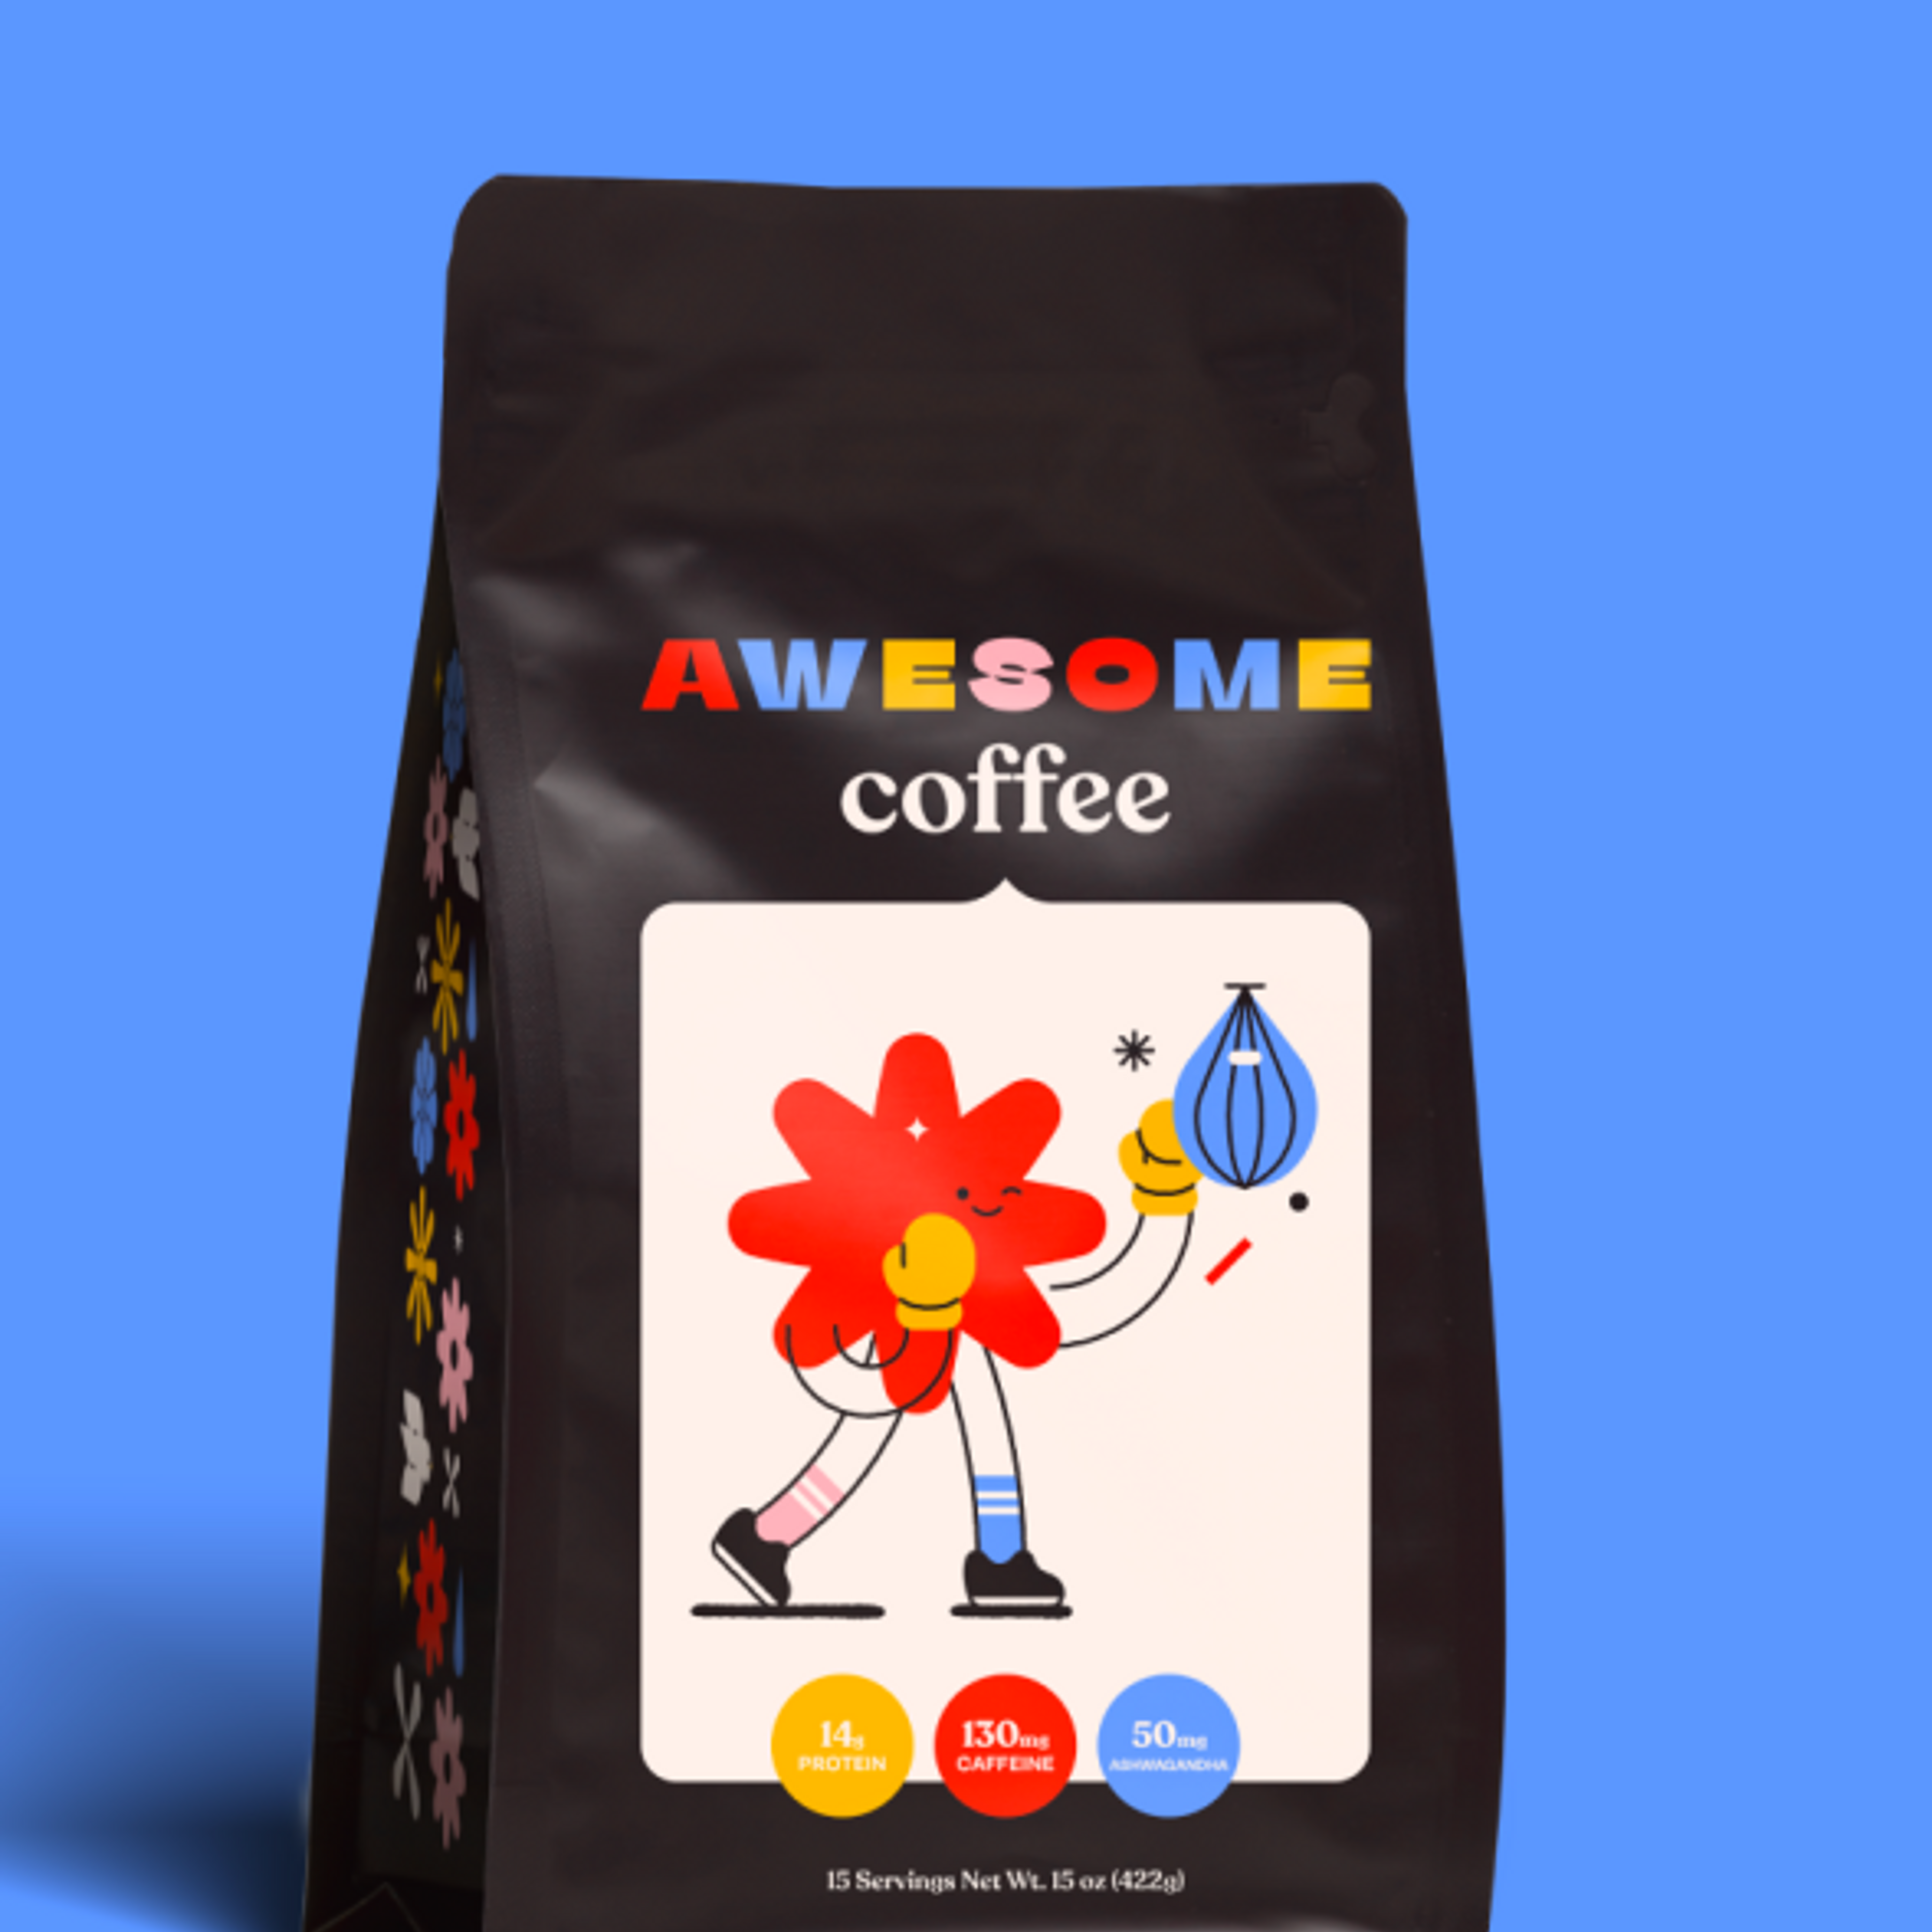 Awesome Coffee